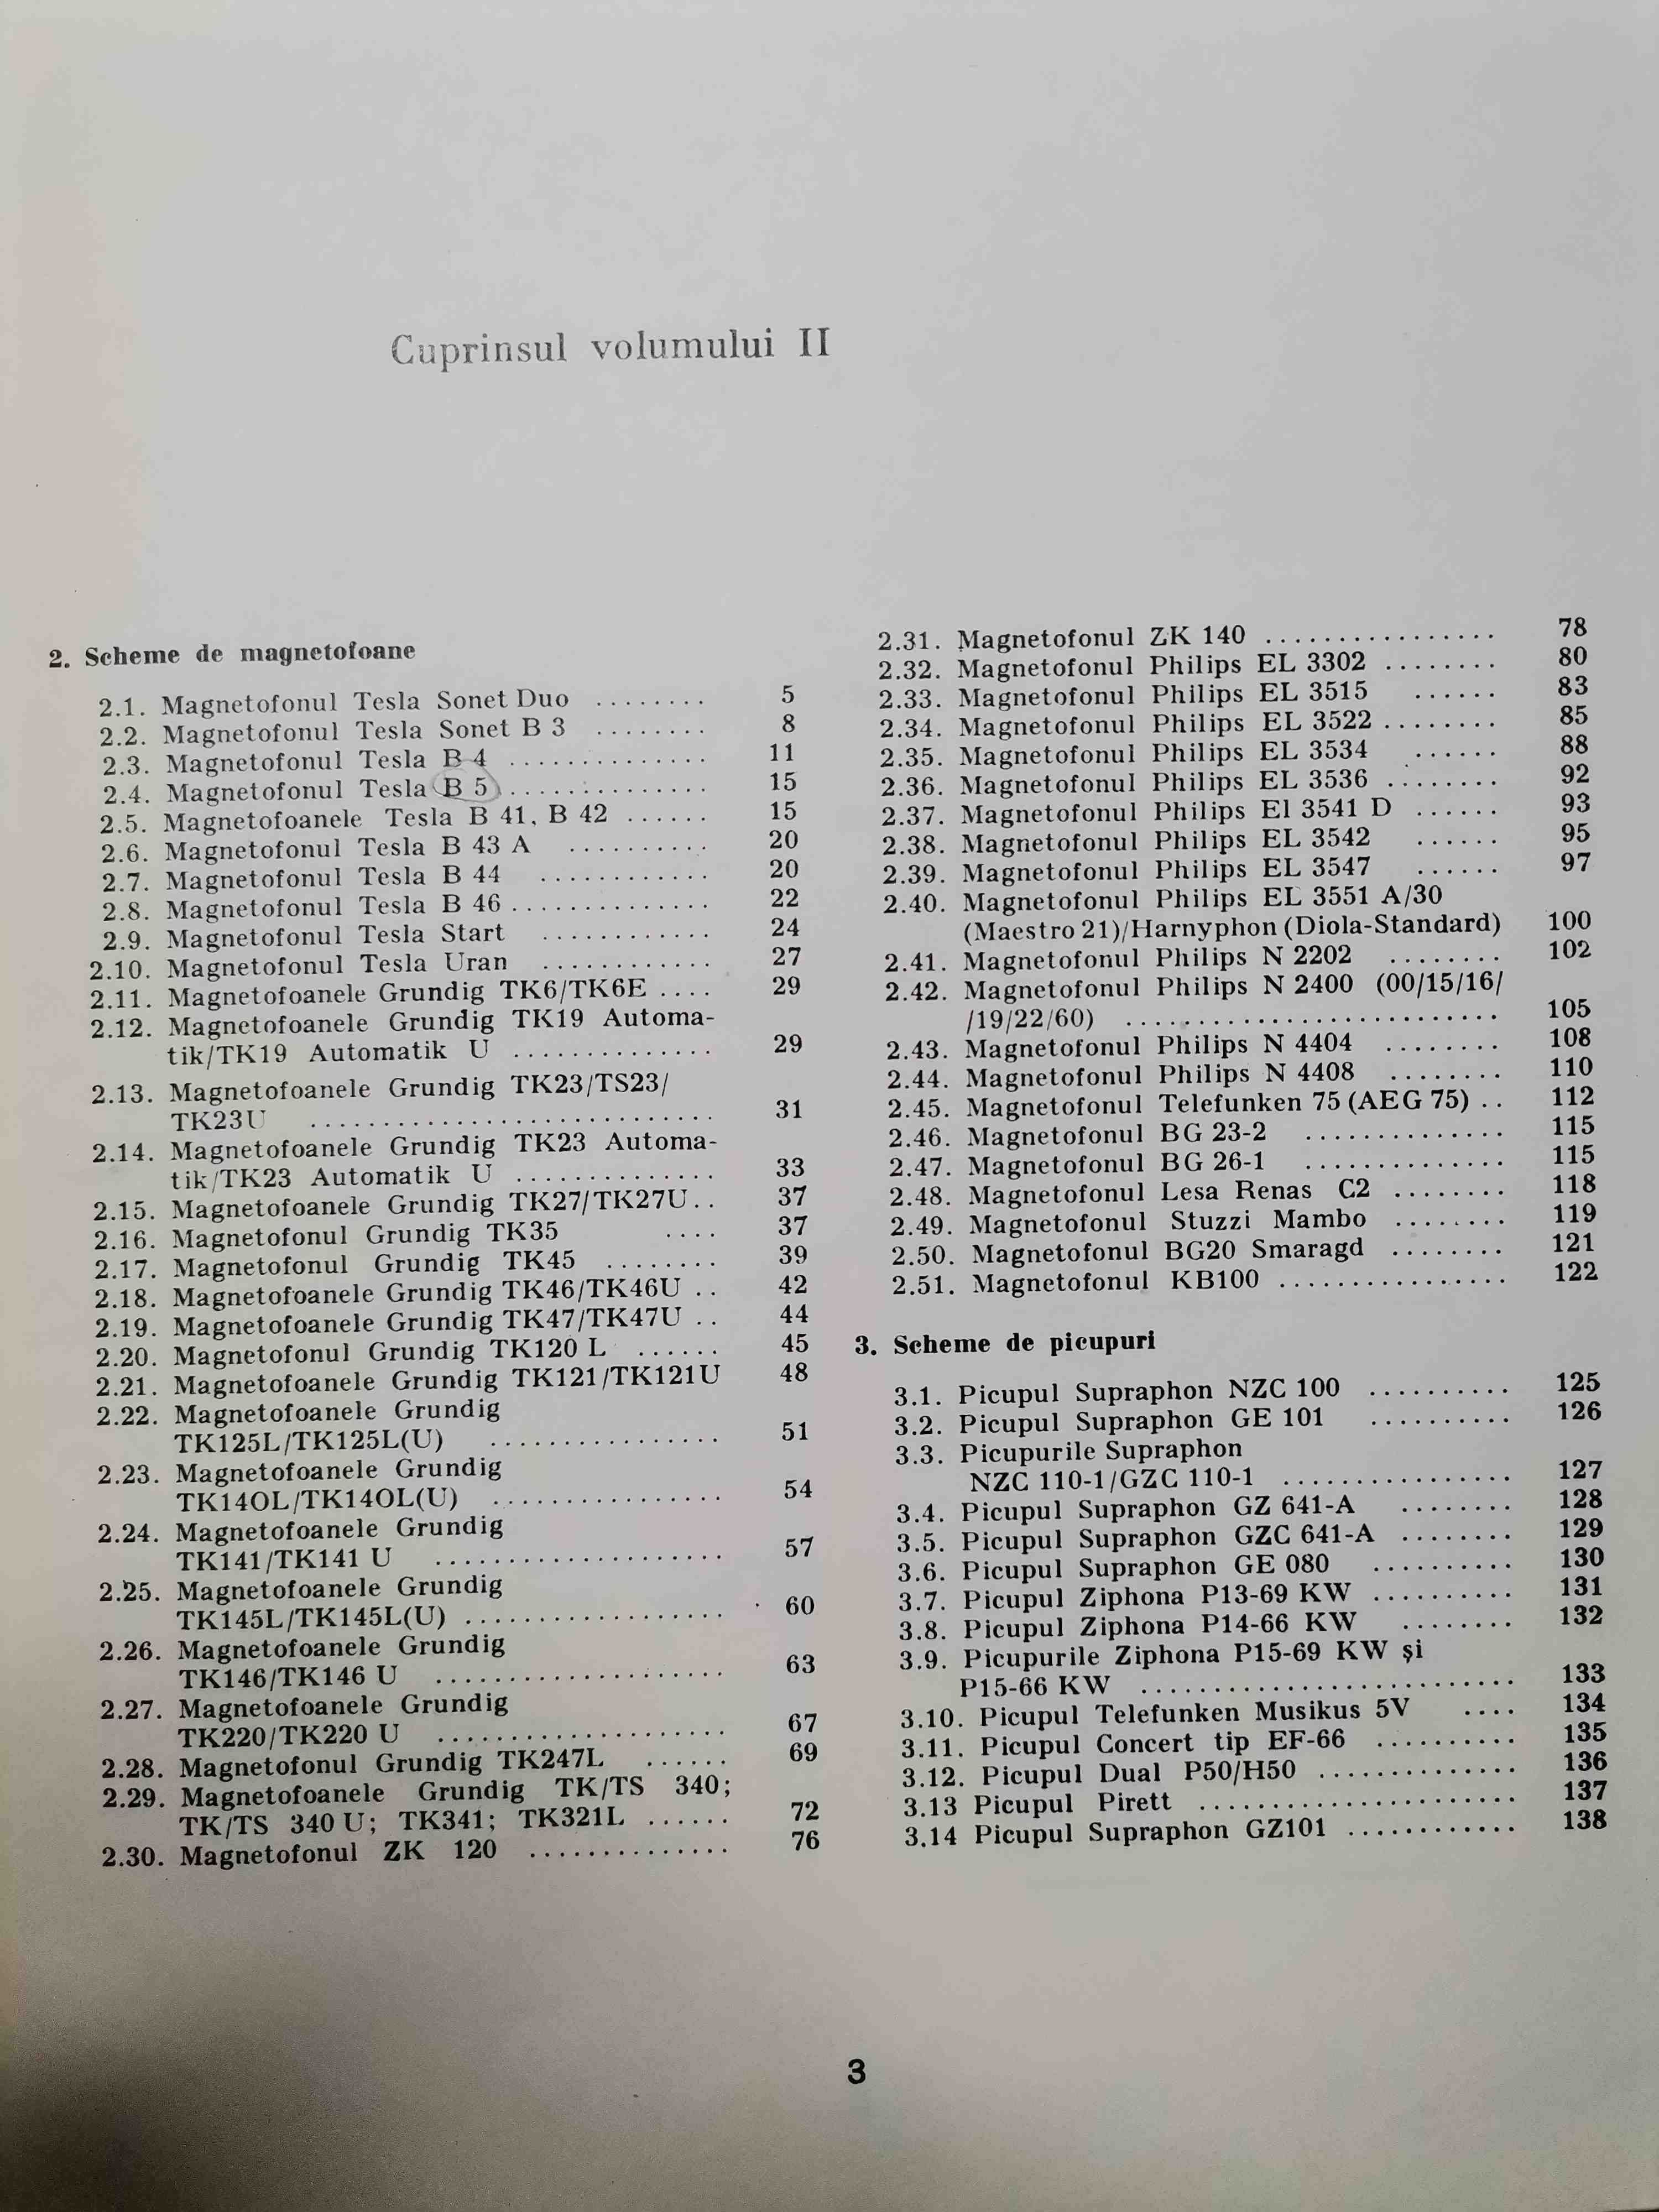 Scheme de televizoare Magnetofoane Picupuri (vol I +vol II)